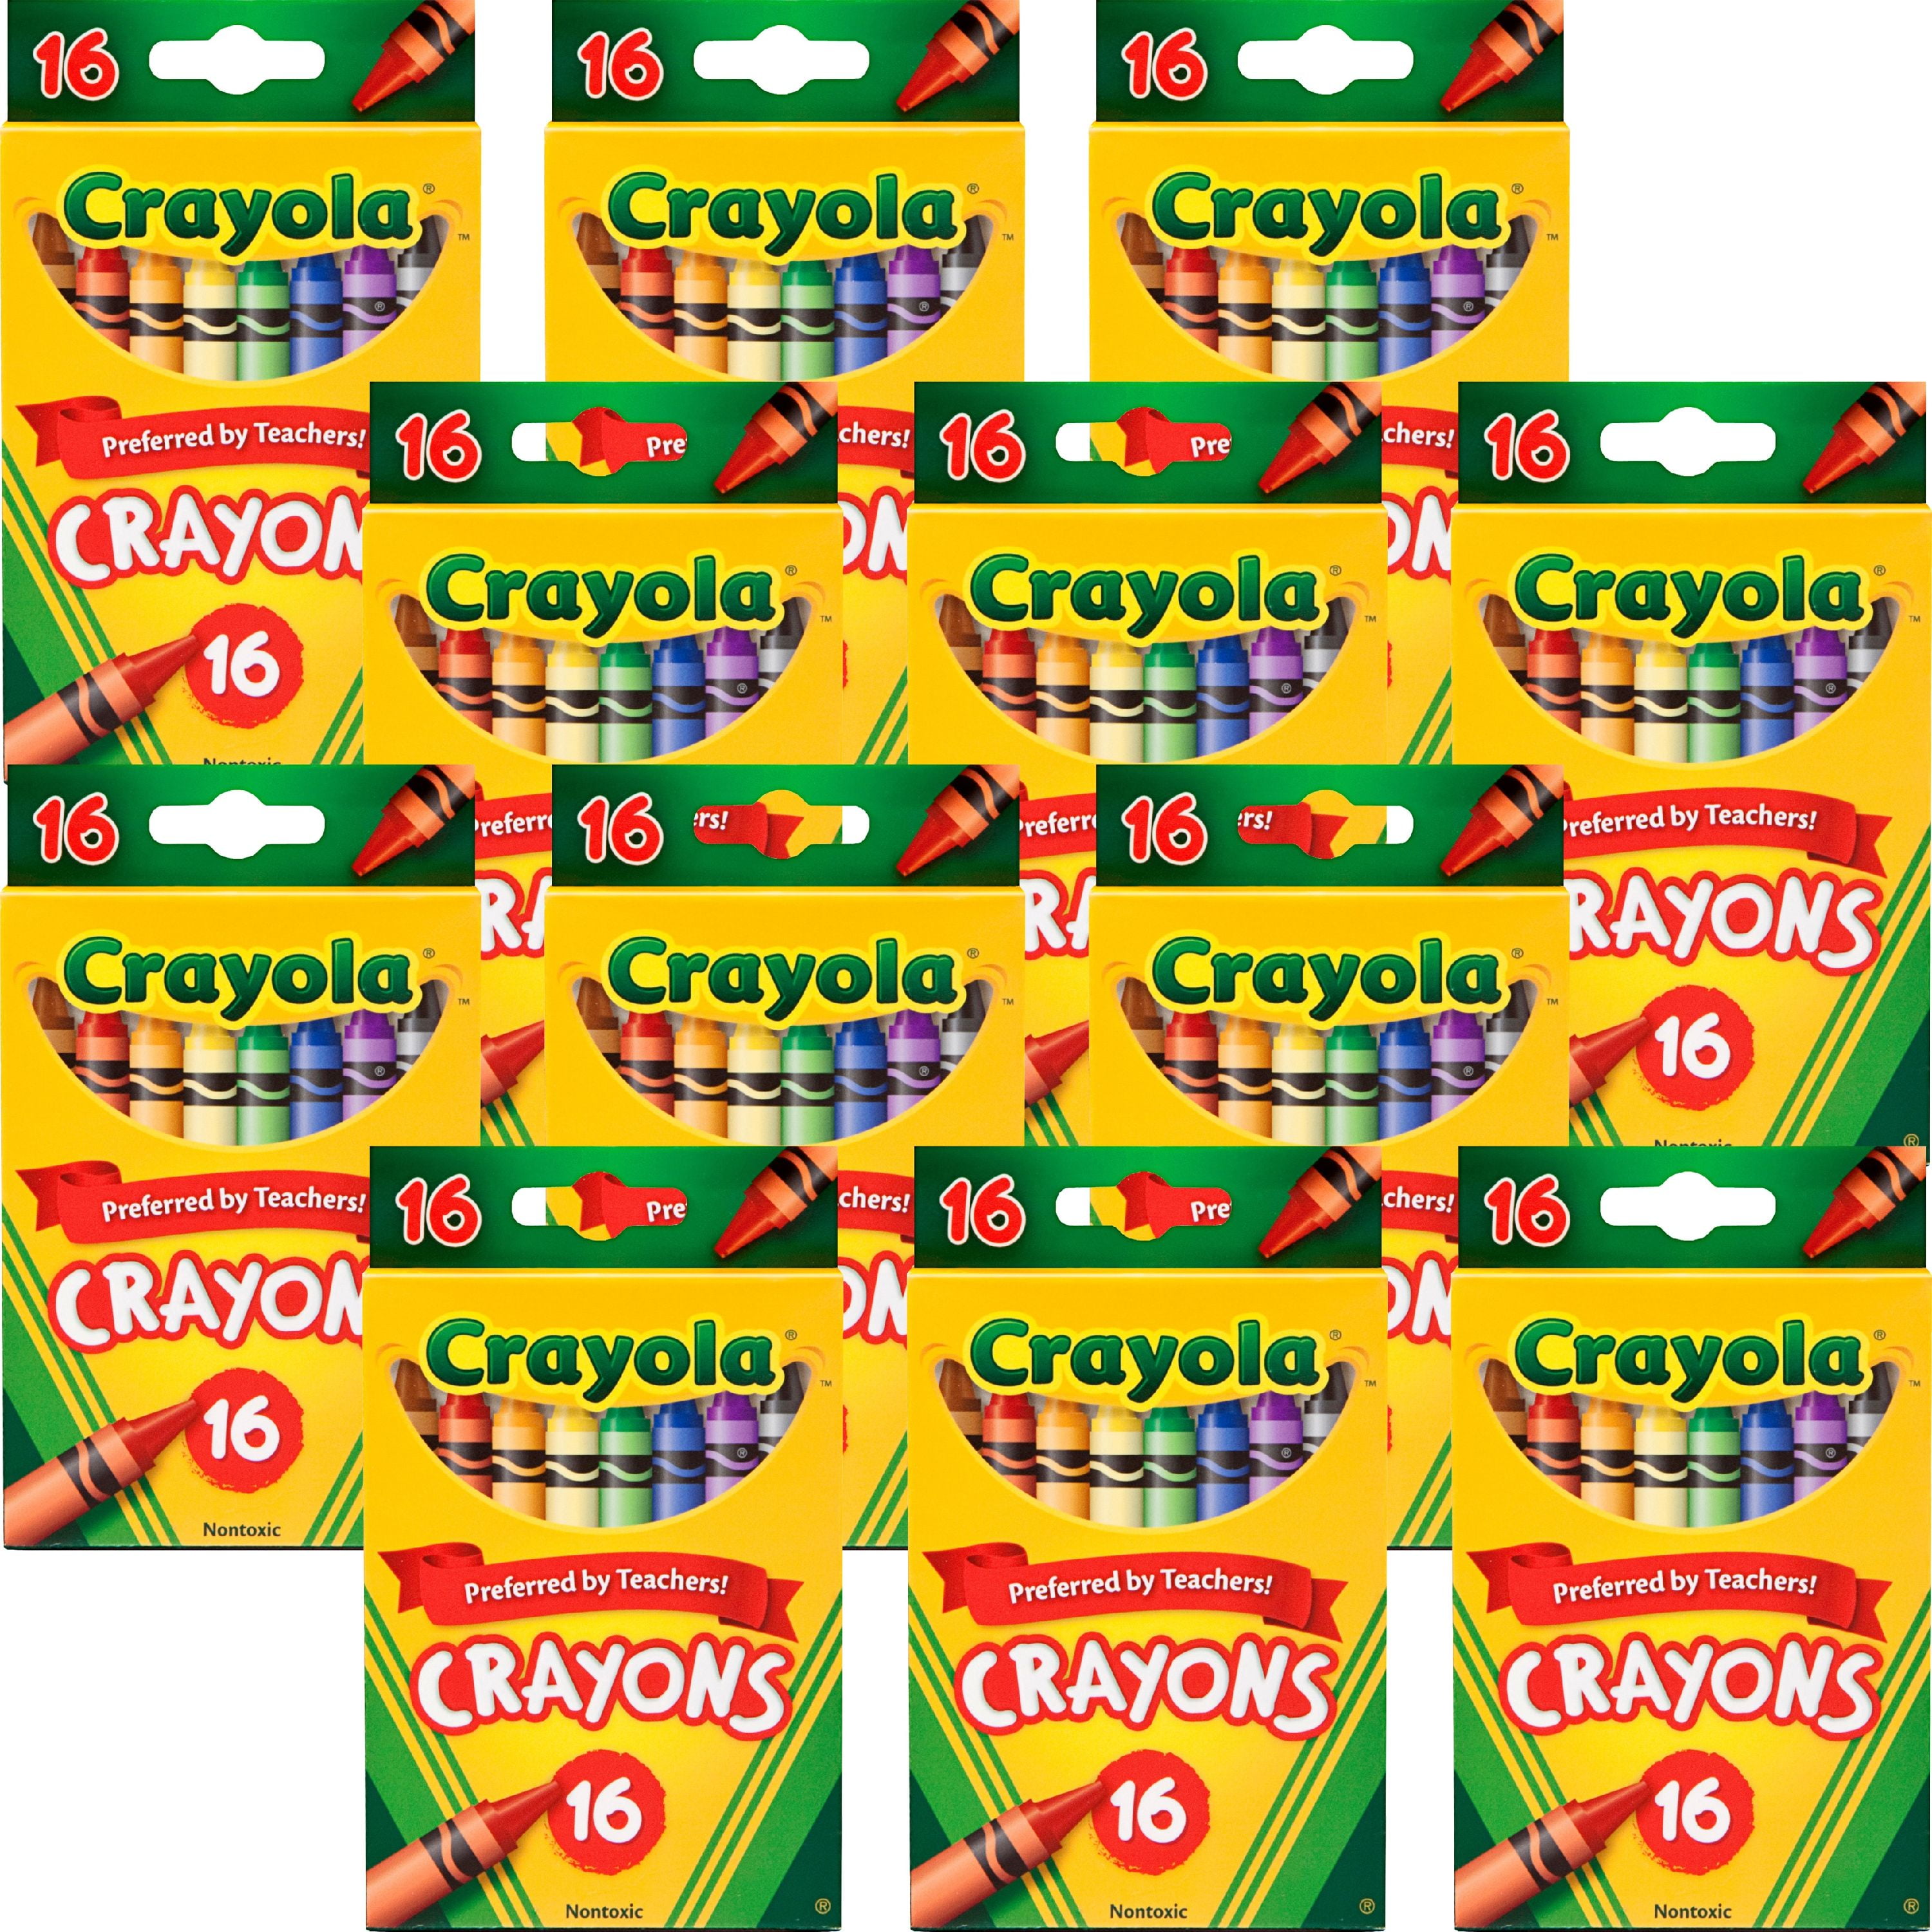 Crayola Crayons Assorted Colors, 16/Box (52-3016)